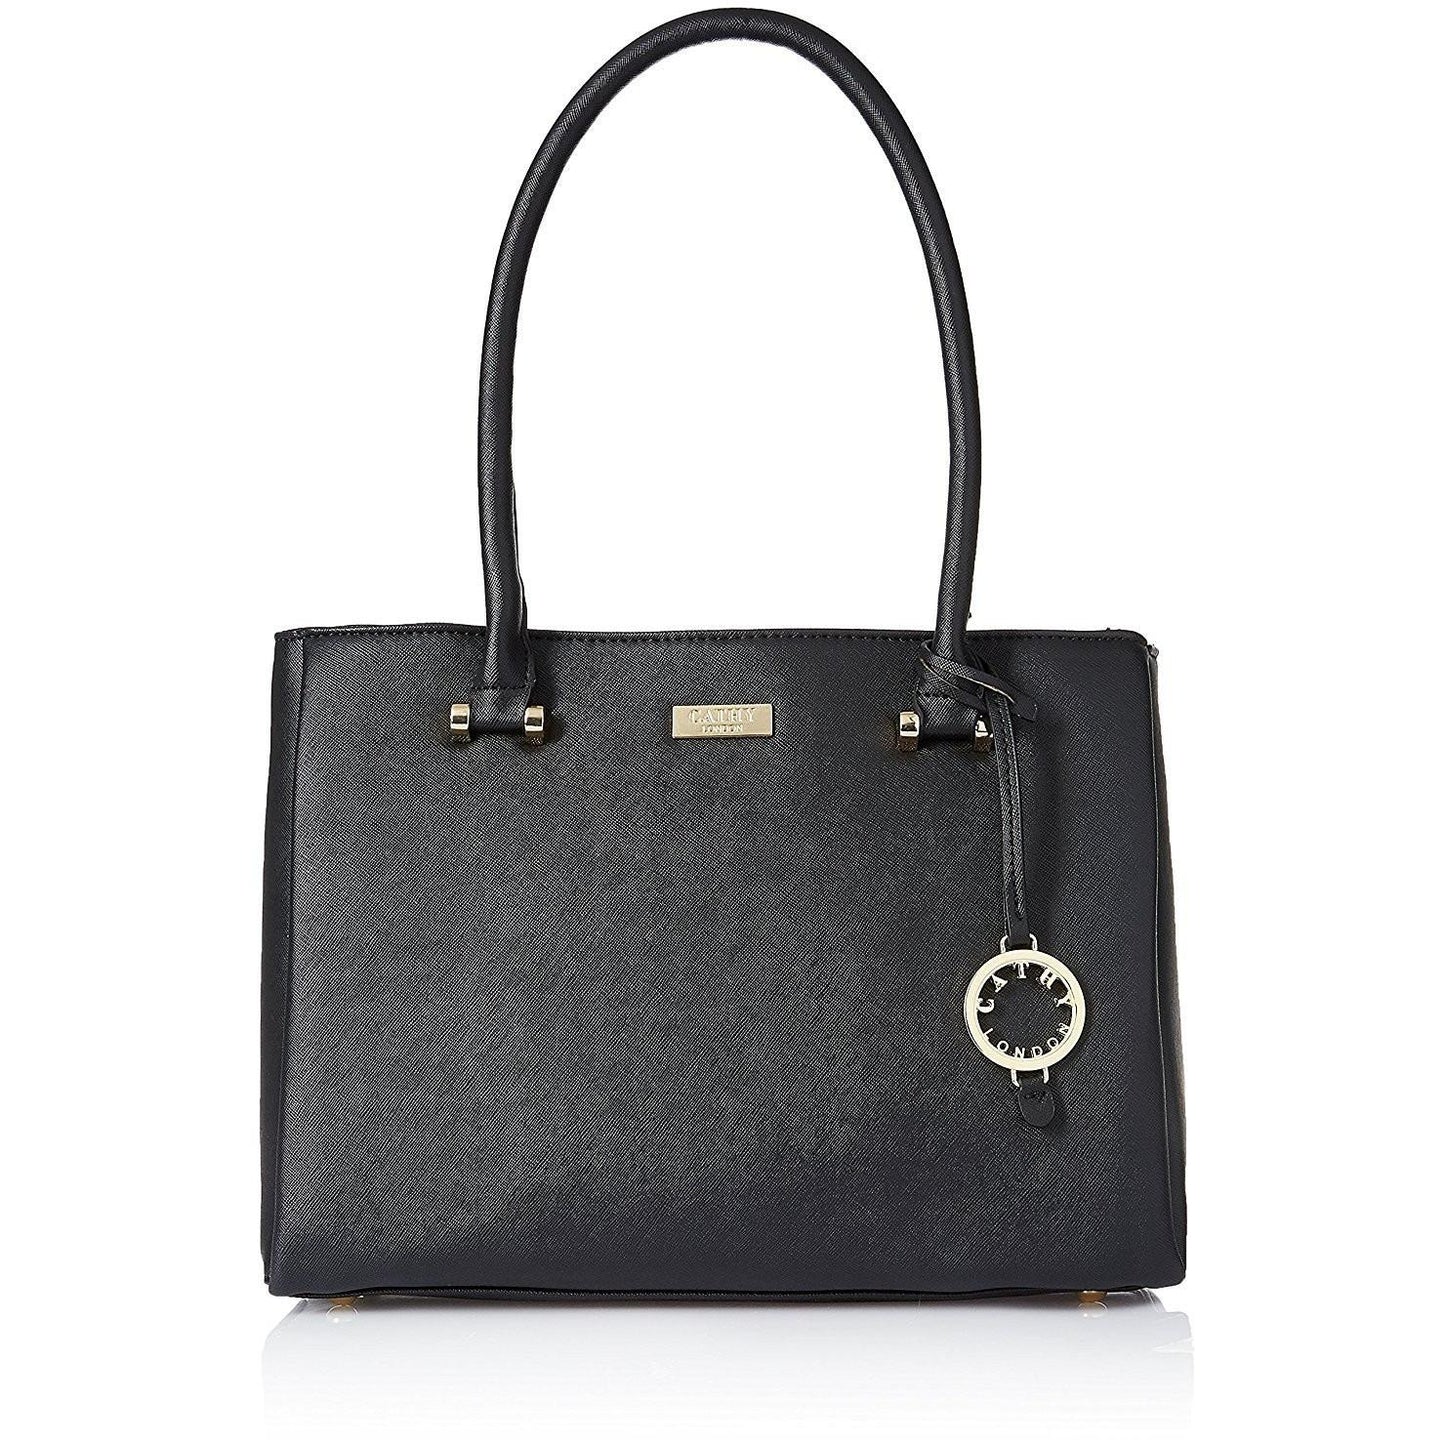 cathy london black handbag